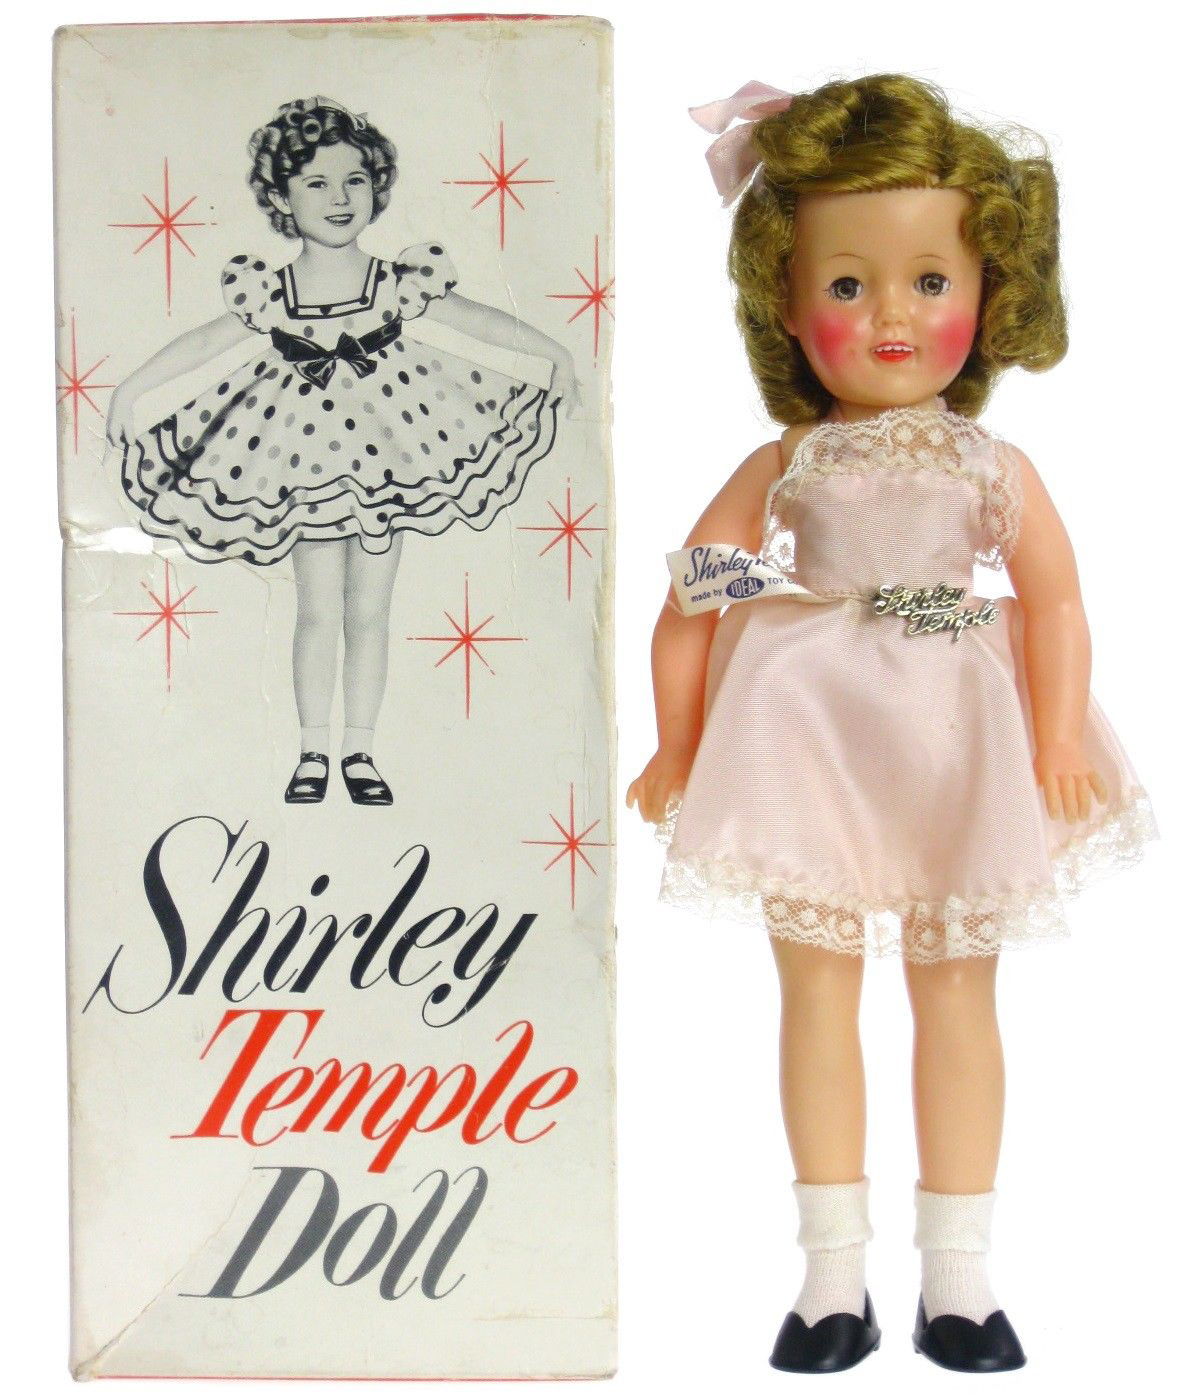 shirley temple ceramic doll